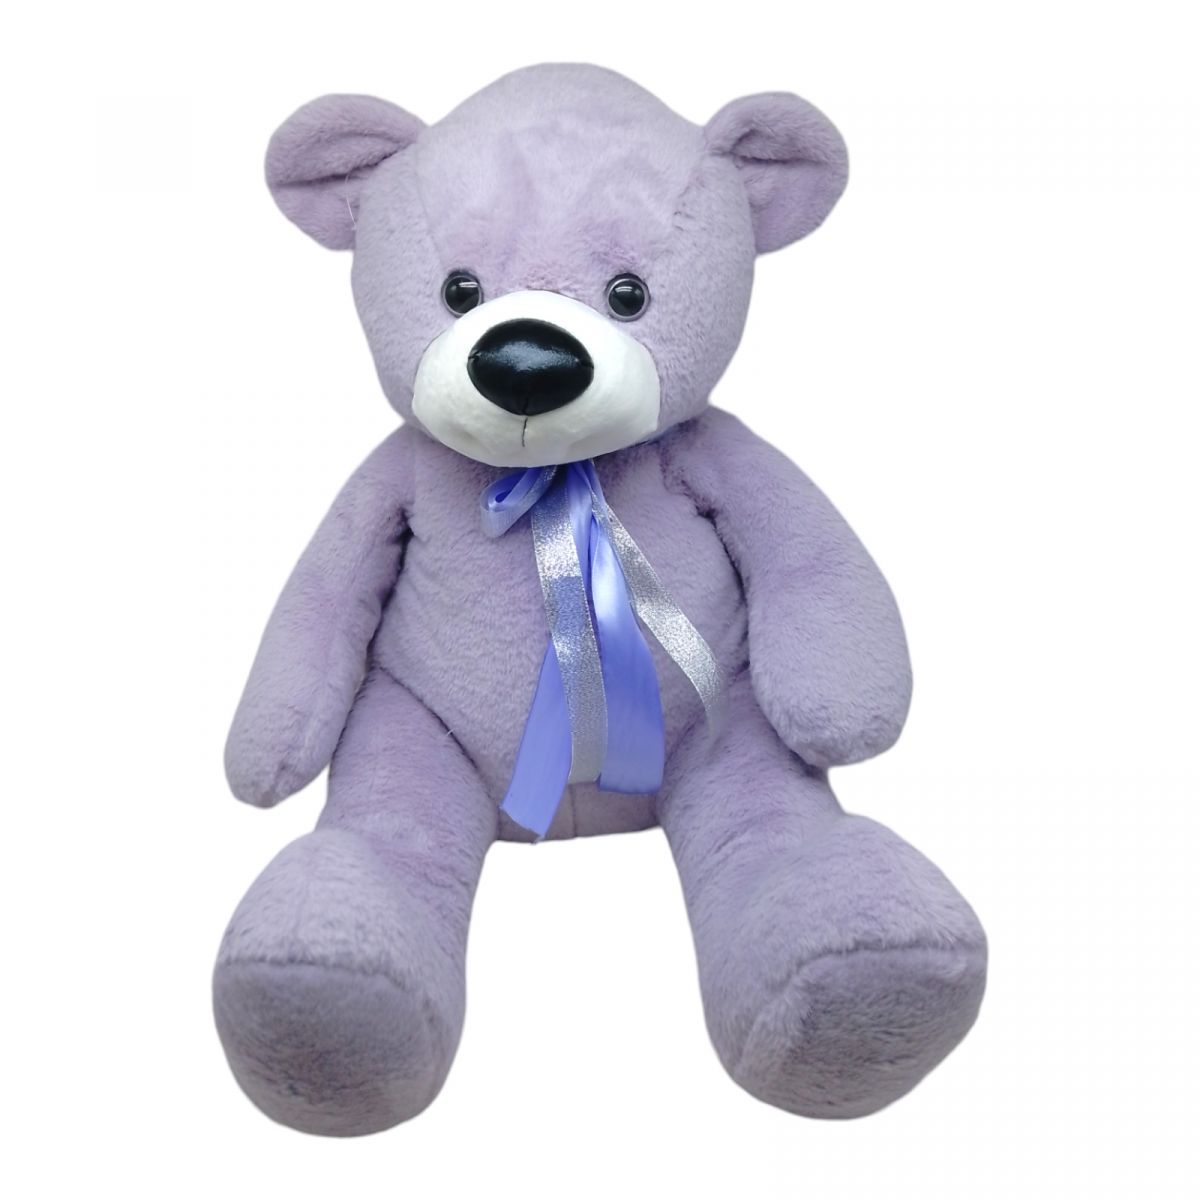 М'яка іграшка Ведмедик Teddy Luxury purple 60 см (за стандартом - 85 см)